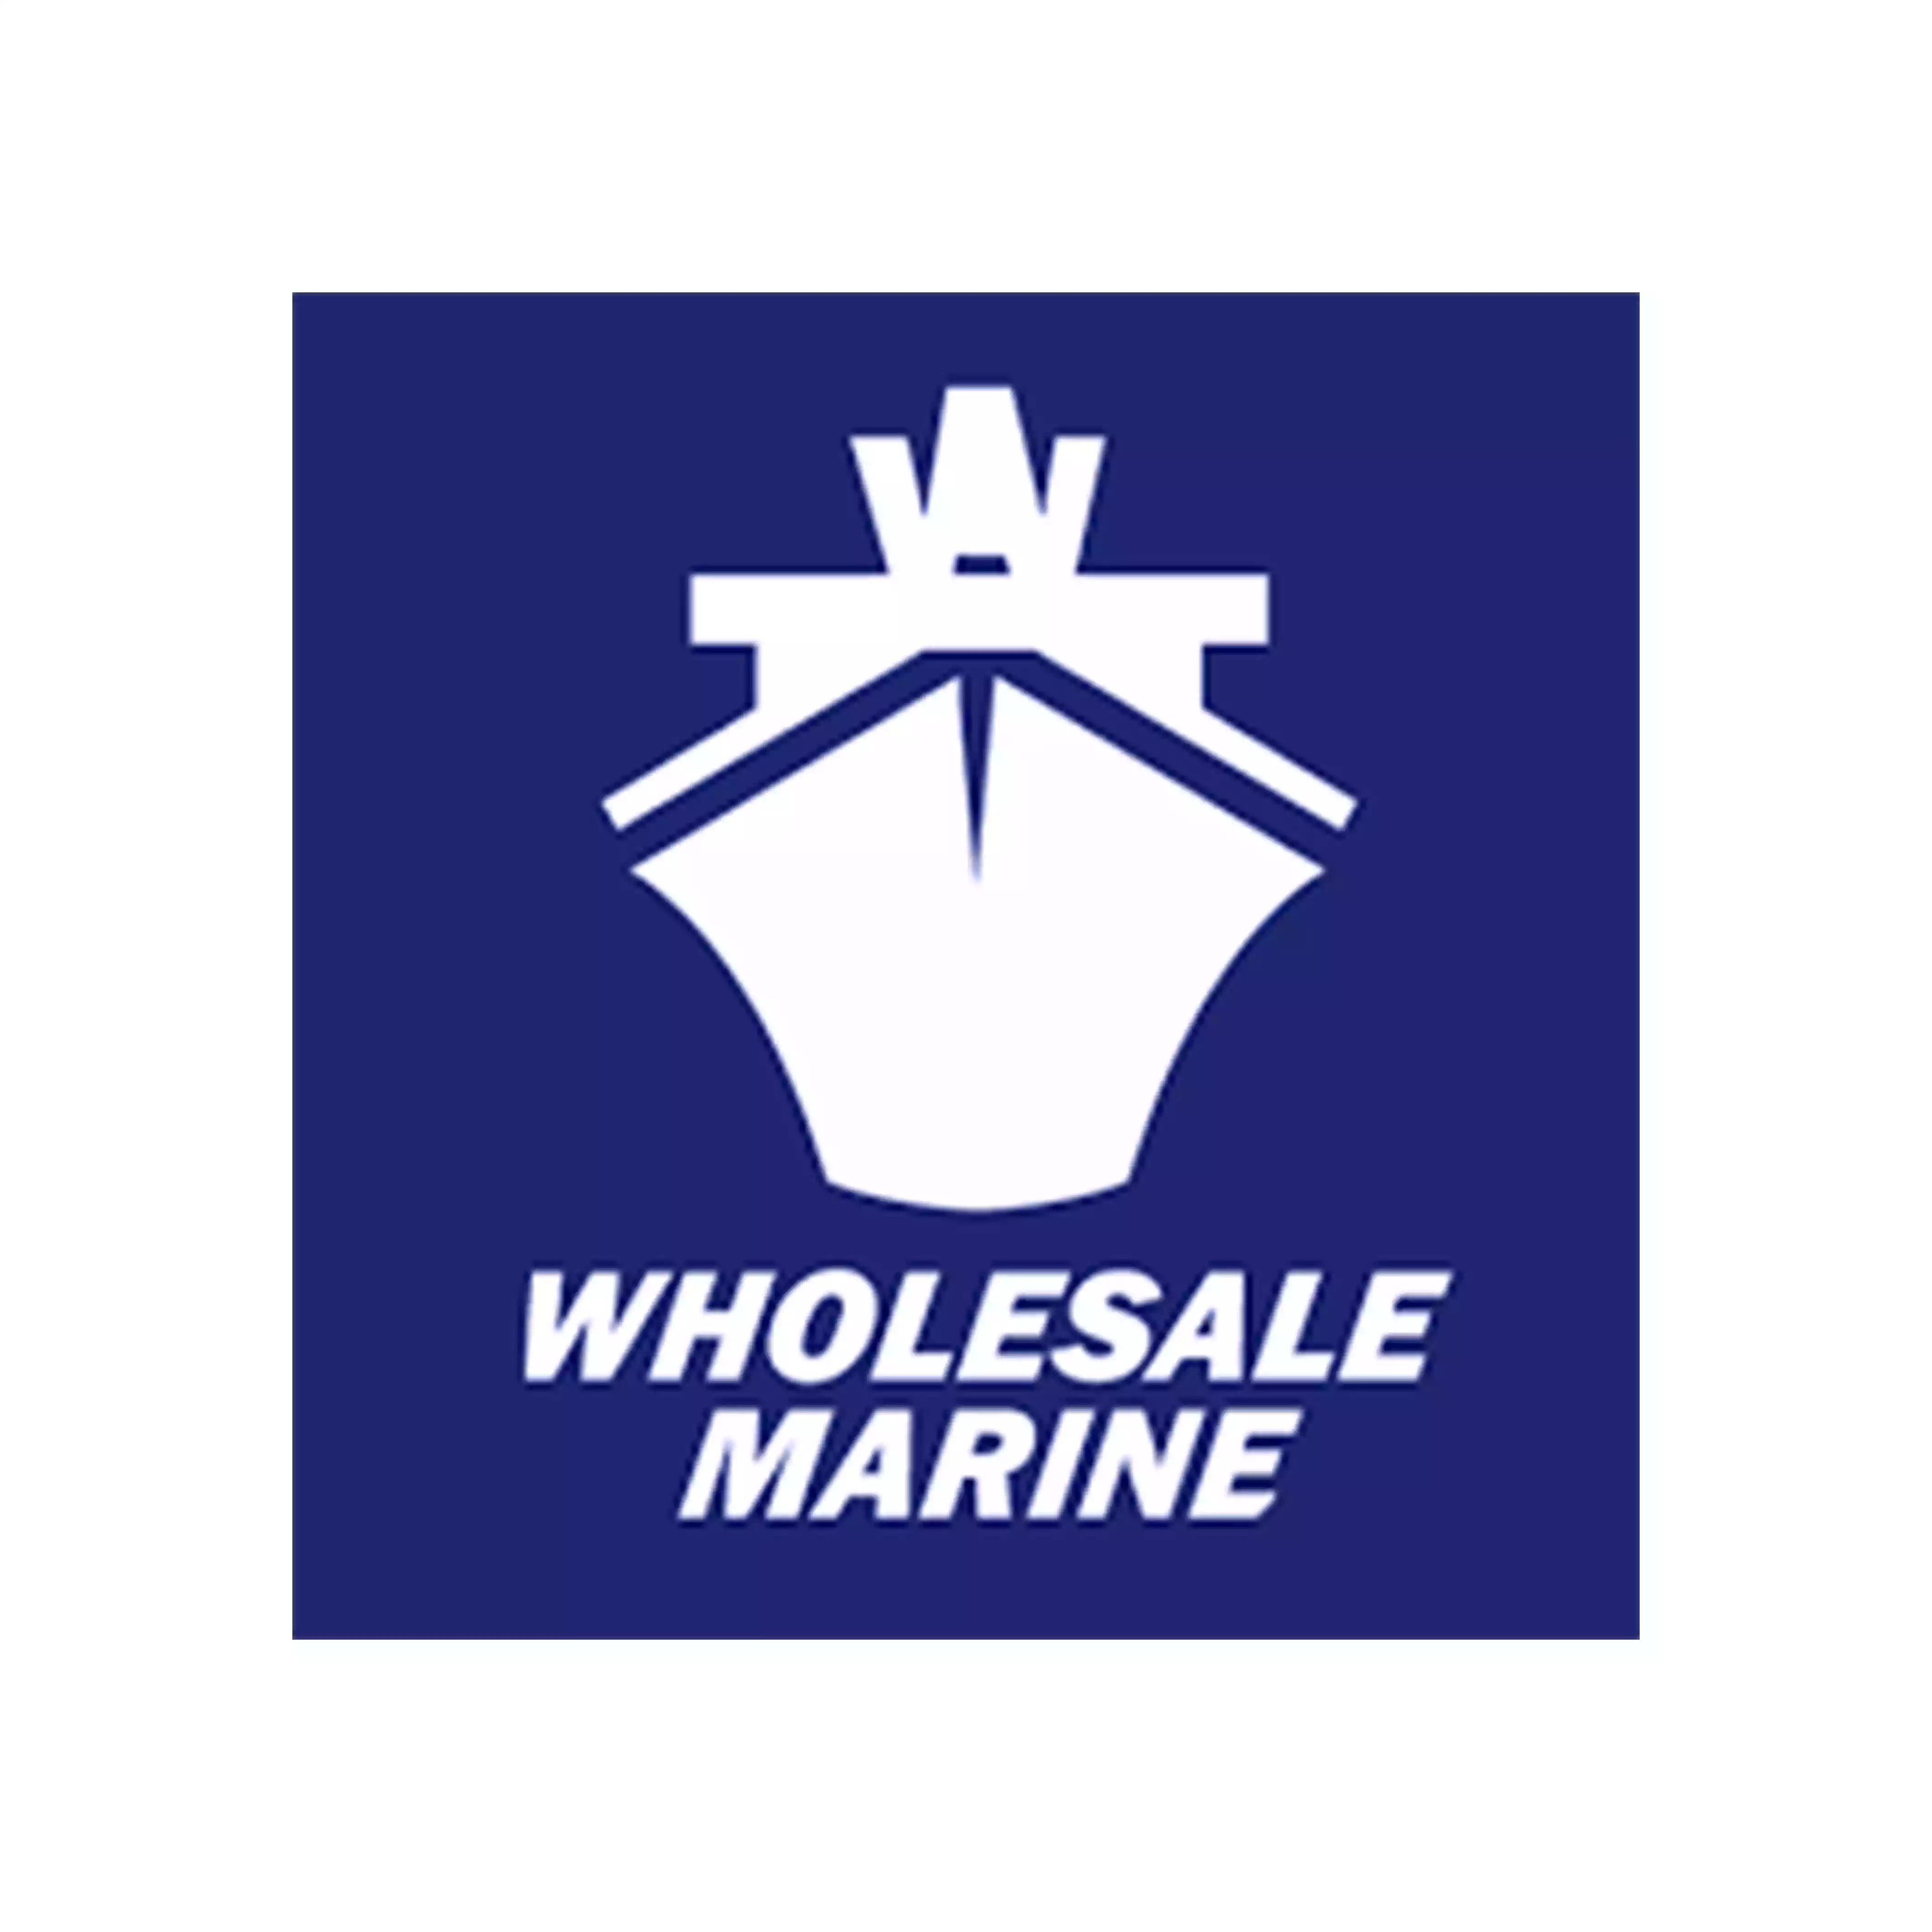 Wholesale Marine discount codes